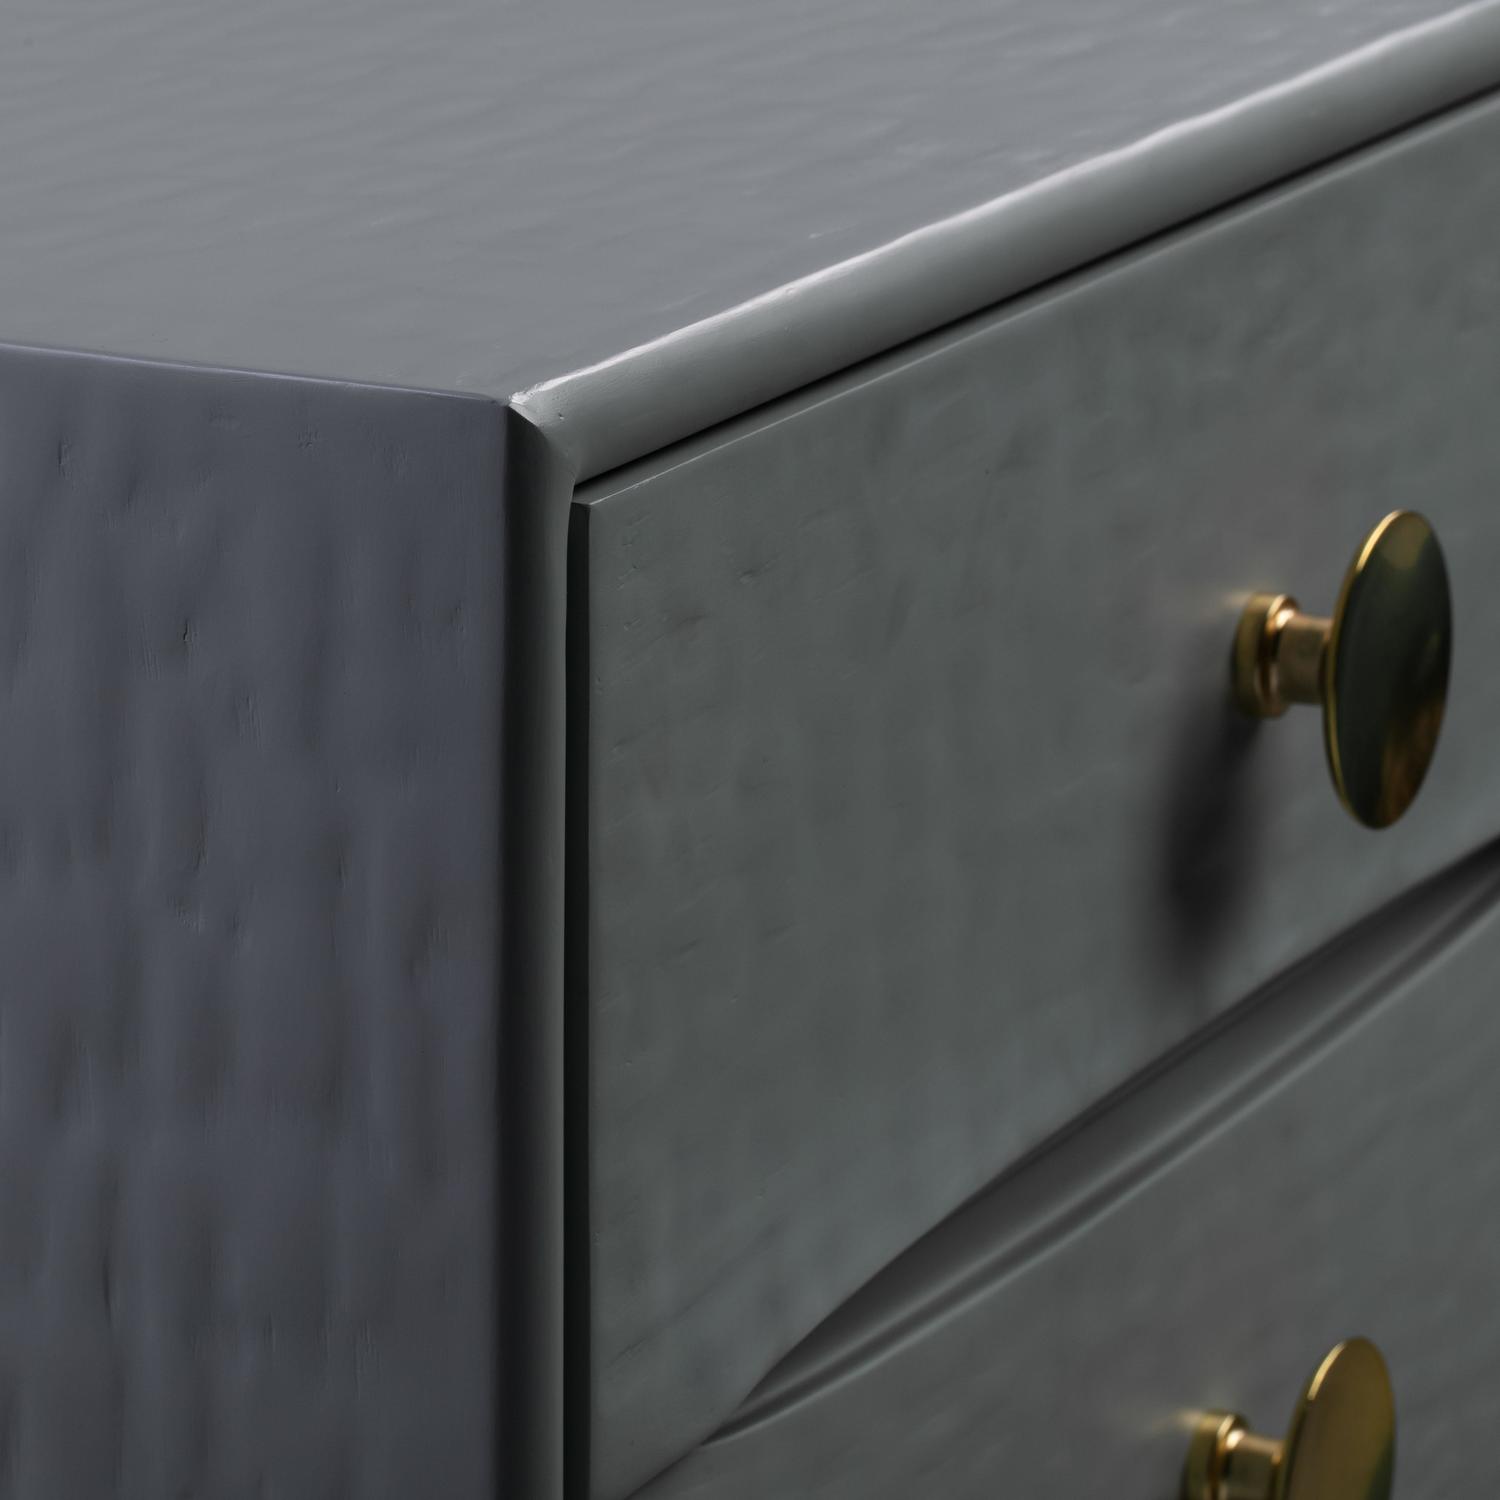 2 drawer modern nightstand Tov Furniture Nightstands Grey